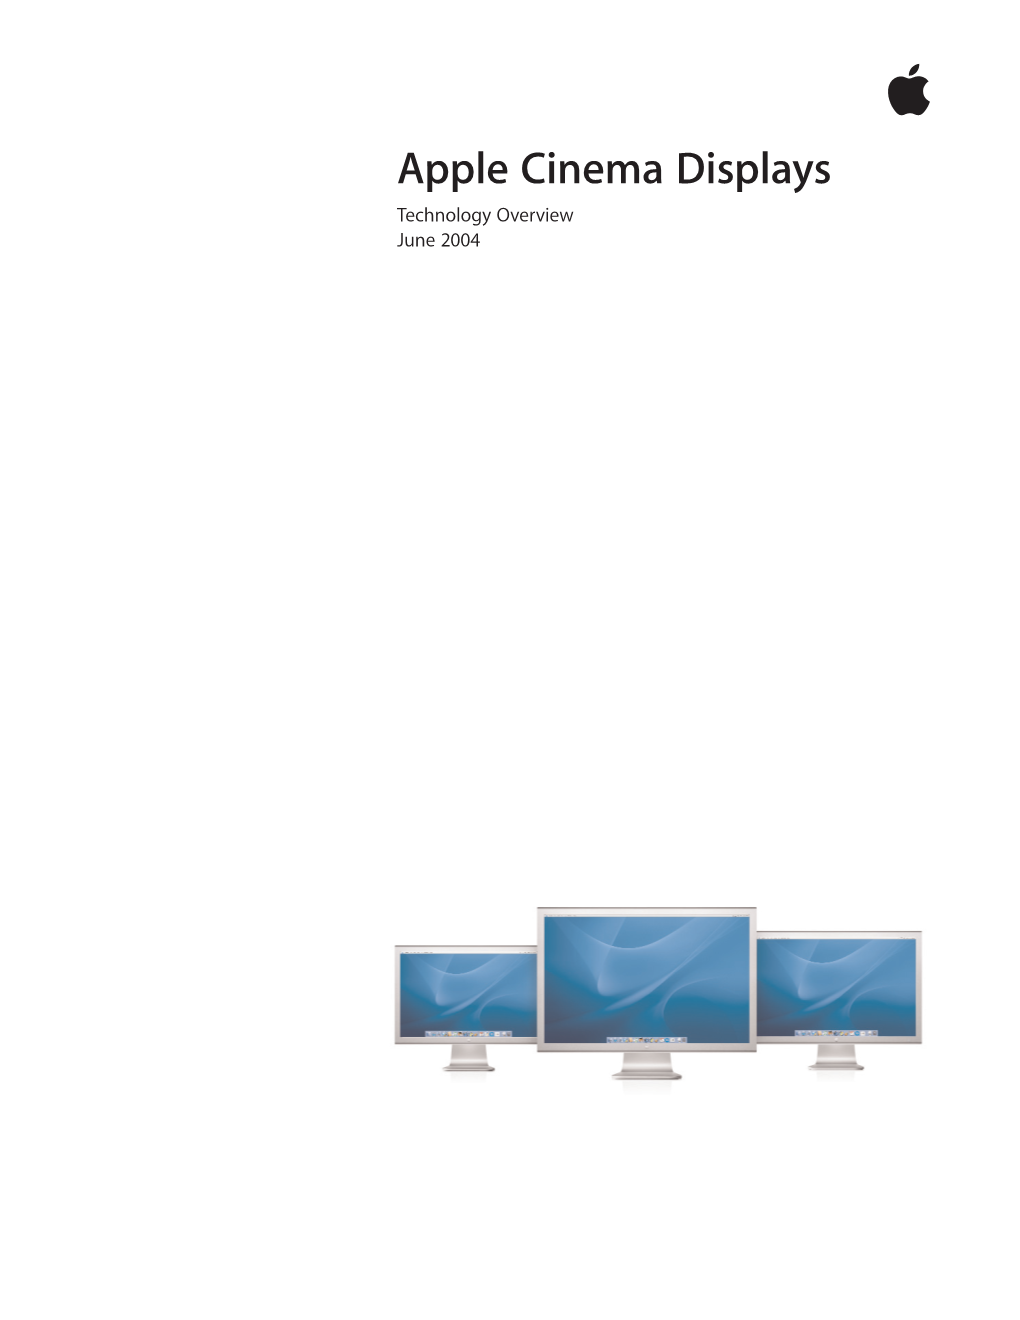 Apple Cinema Displays Technology Overview June 2004 Technology Overview 2 Apple Cinema Displays